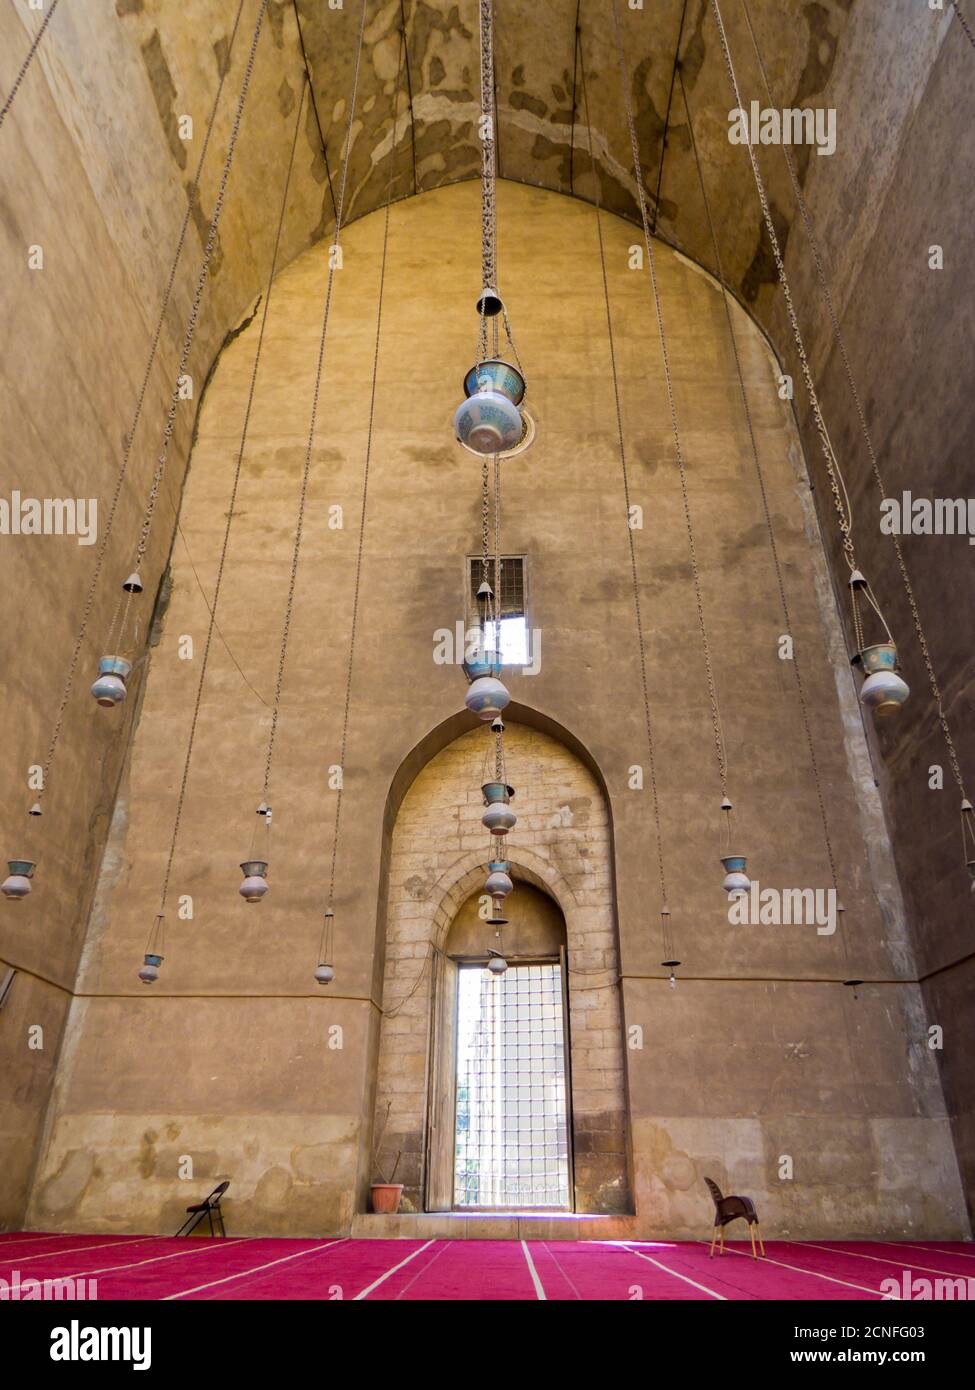 Mosque-Madrassa of Sultan Hassan, Cairo, Egypt Stock Photo